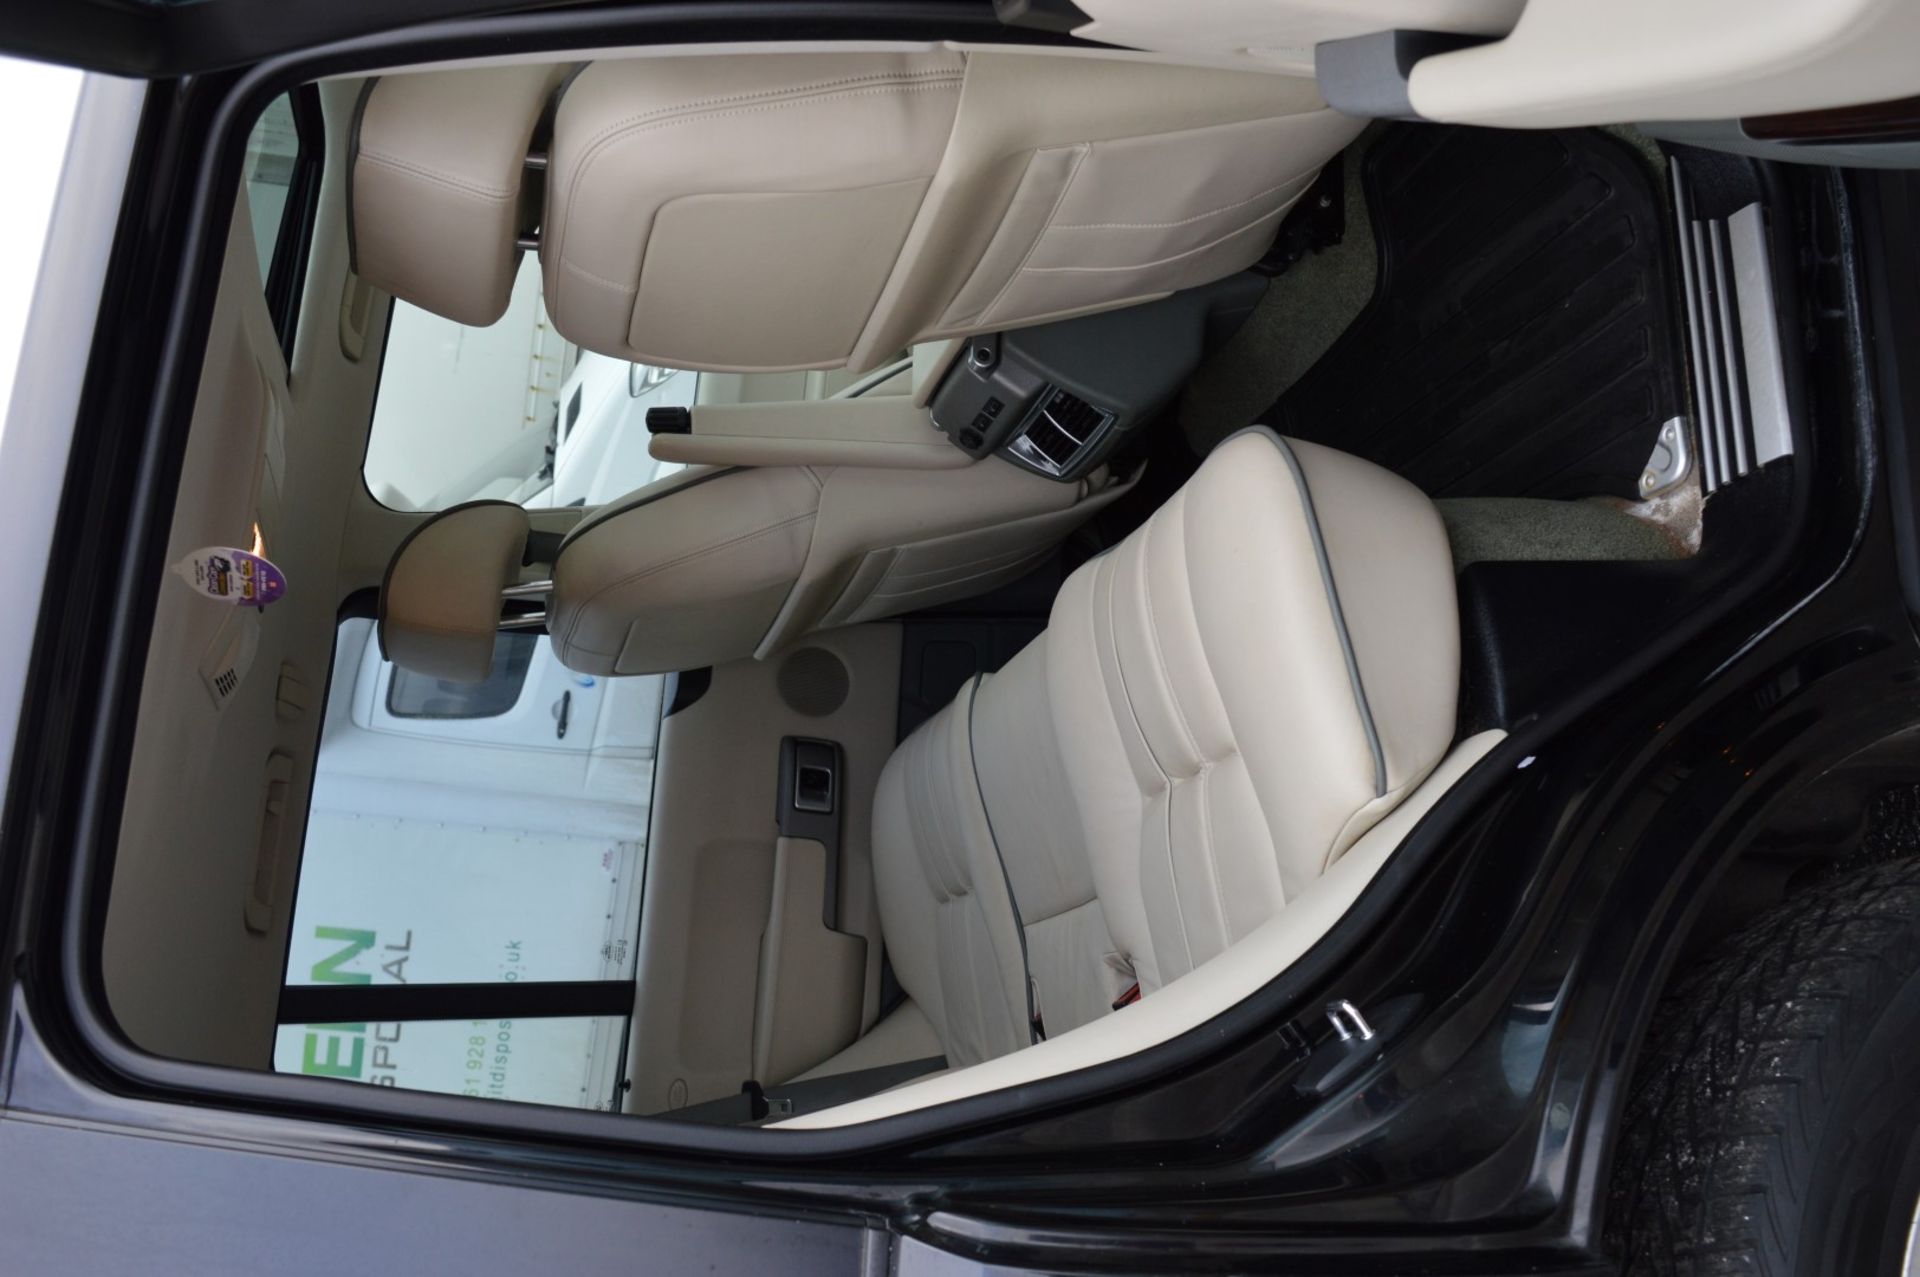 1 x Range Rover Vogue V8 4.4 Automatic - Black, Leather Interior, Petrol, Television, Premium - Image 15 of 63